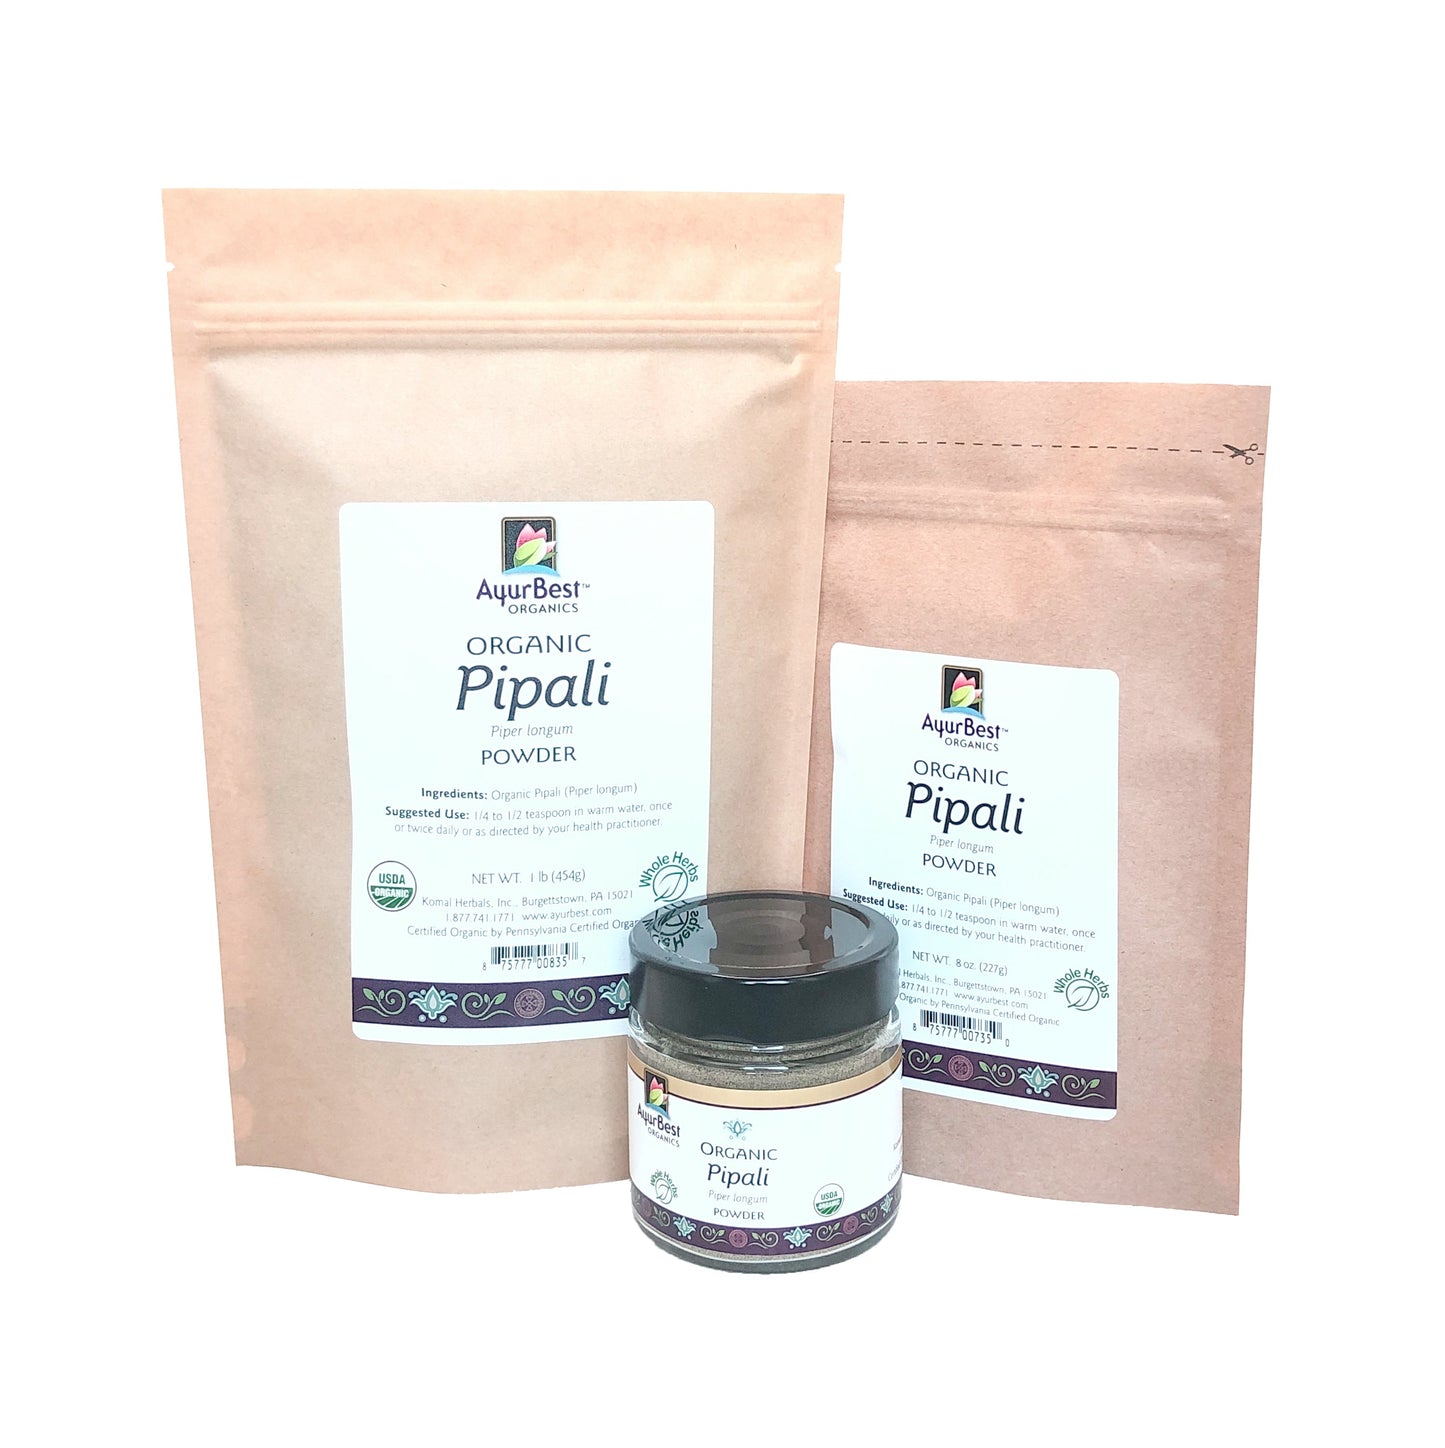 Wholesale Spices & Herbs - Pippali Powder, Organic 8oz (227g) Bag